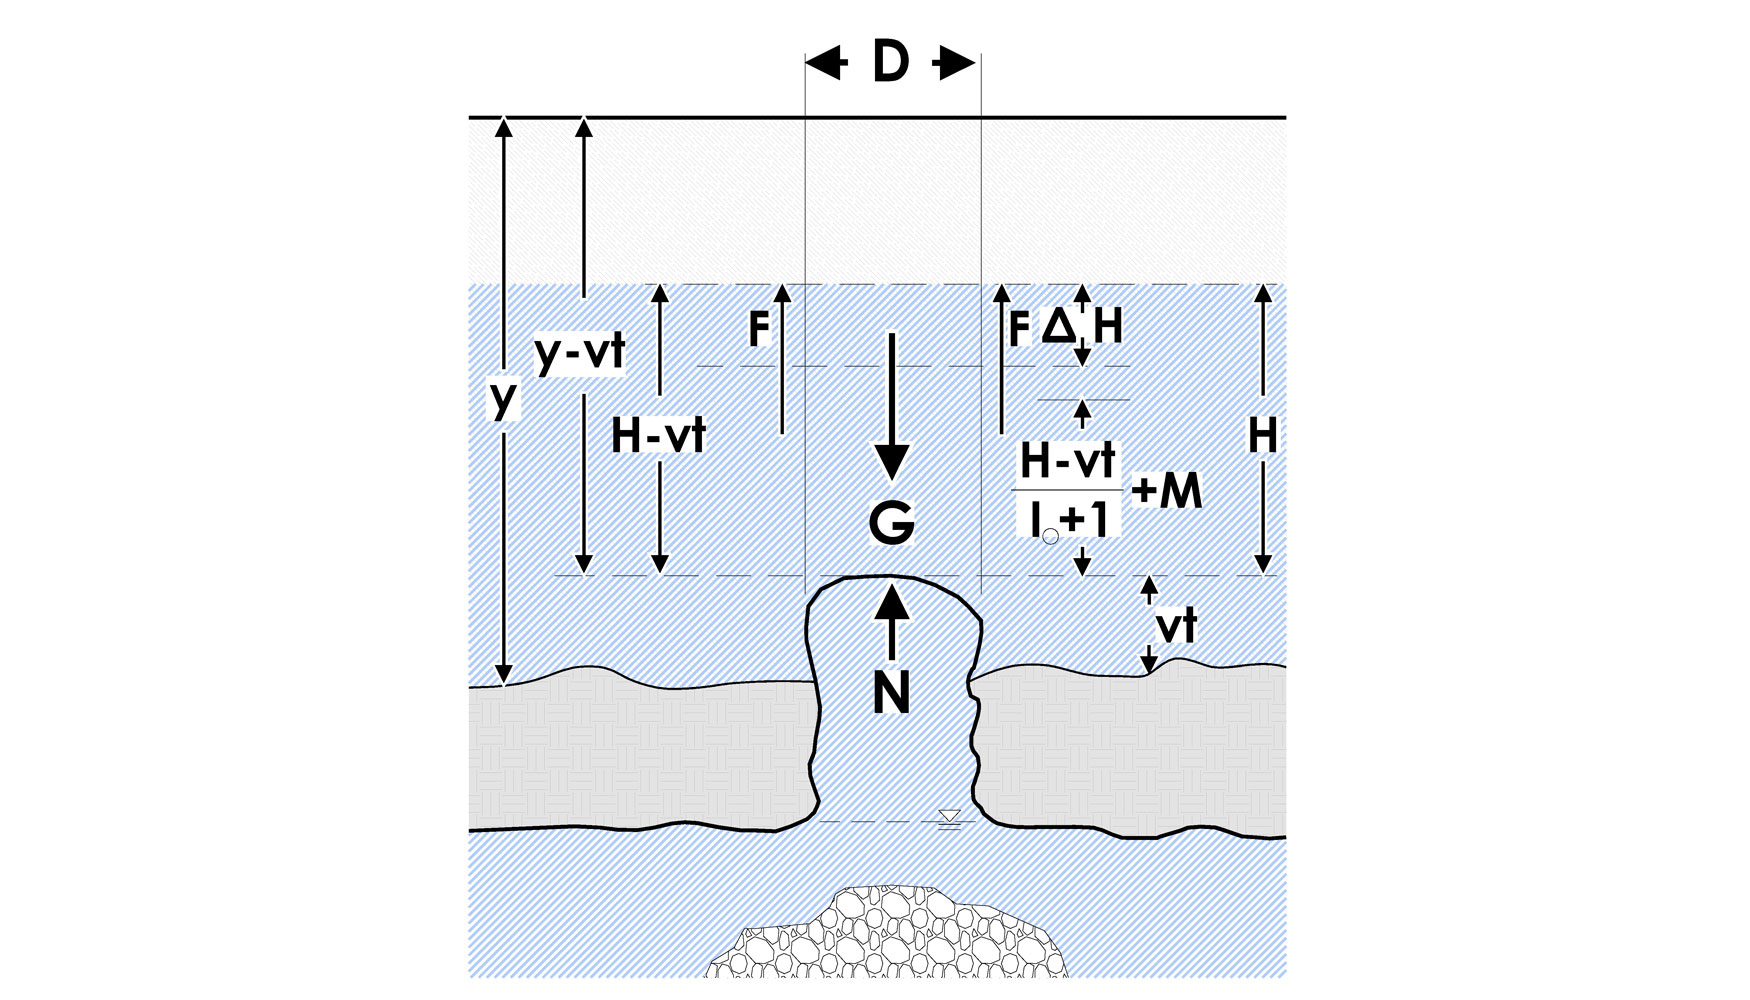 Figura 13.- Pronstico de colapso, modelo de condiciones confinadas (Modificado de Jianyi y Jian, 1987)